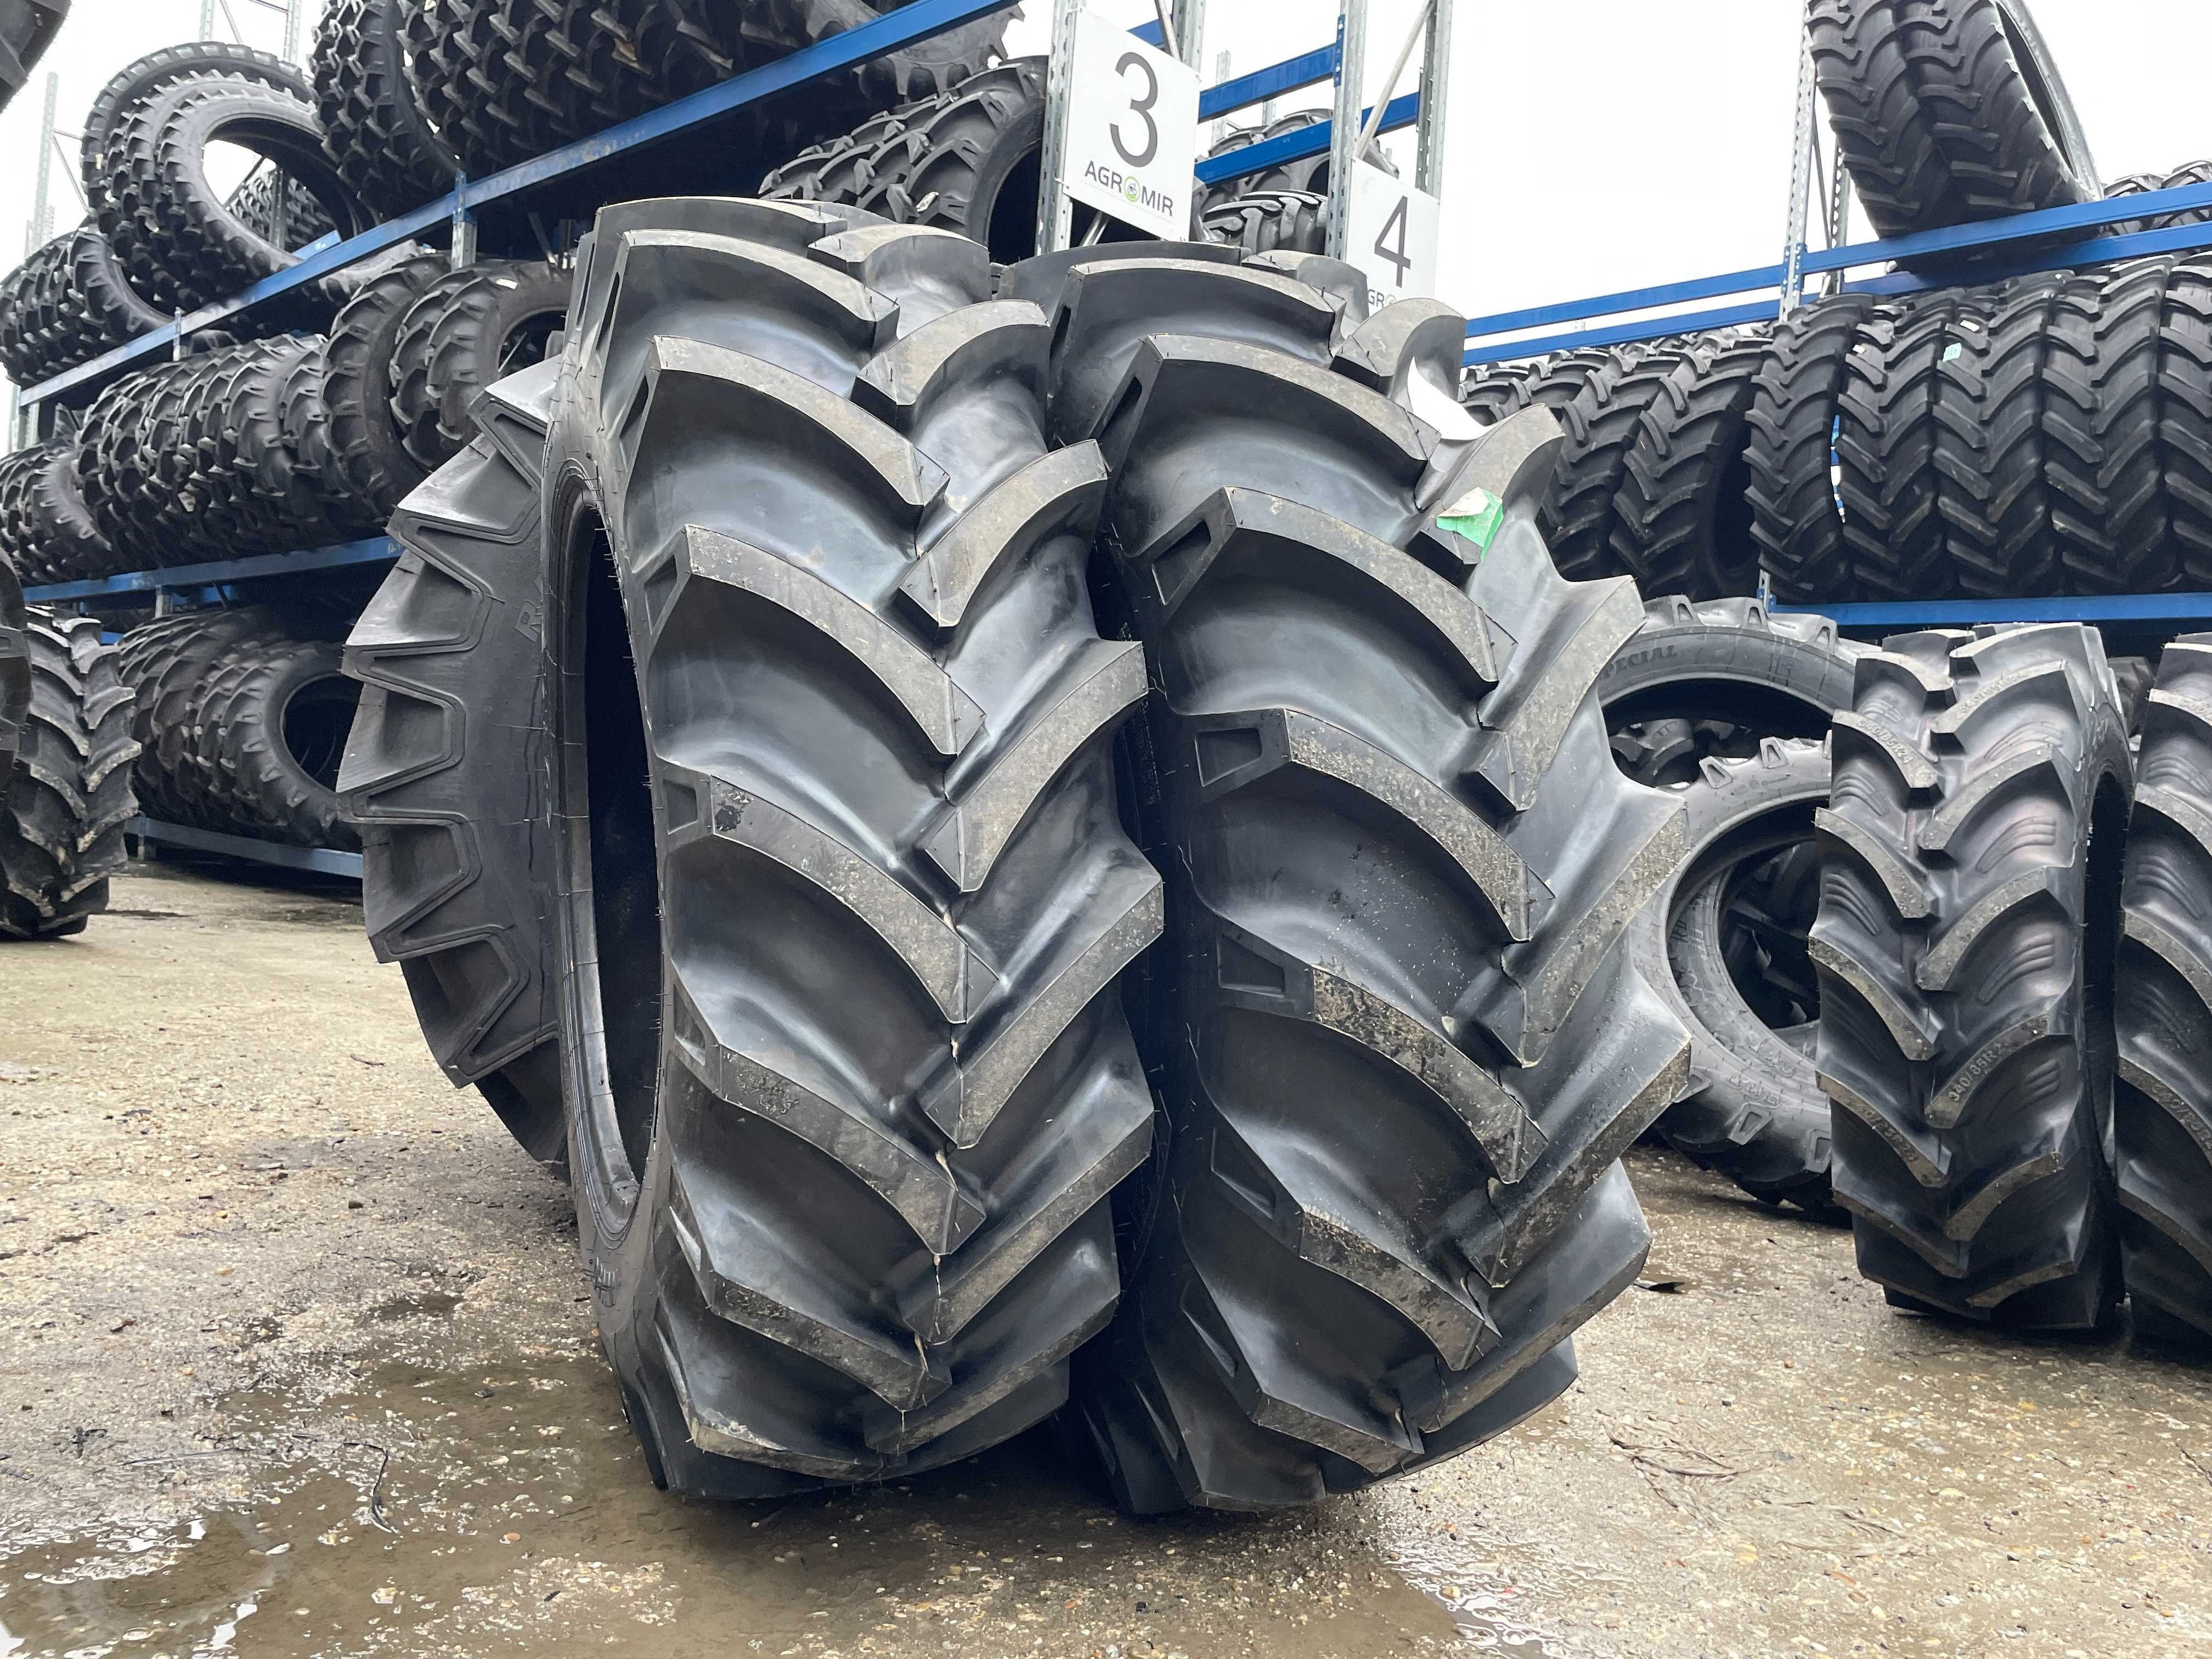 OZKA Anvelope noi agricole de tractor spate 16.9-30 10pliuri